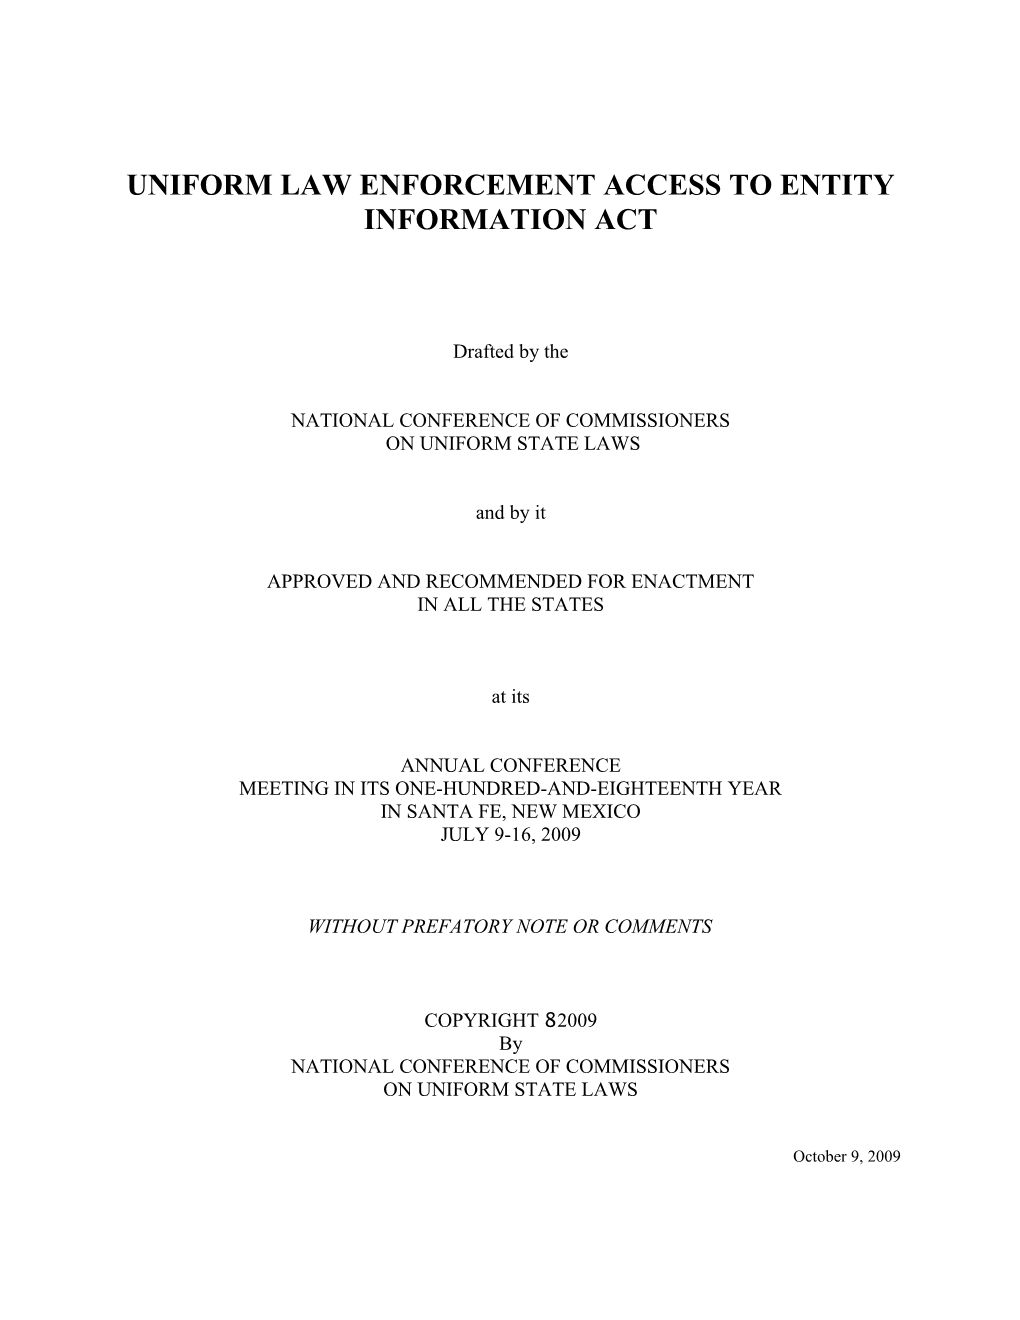 Uniform Law Enforcement Access to Entity Information Act